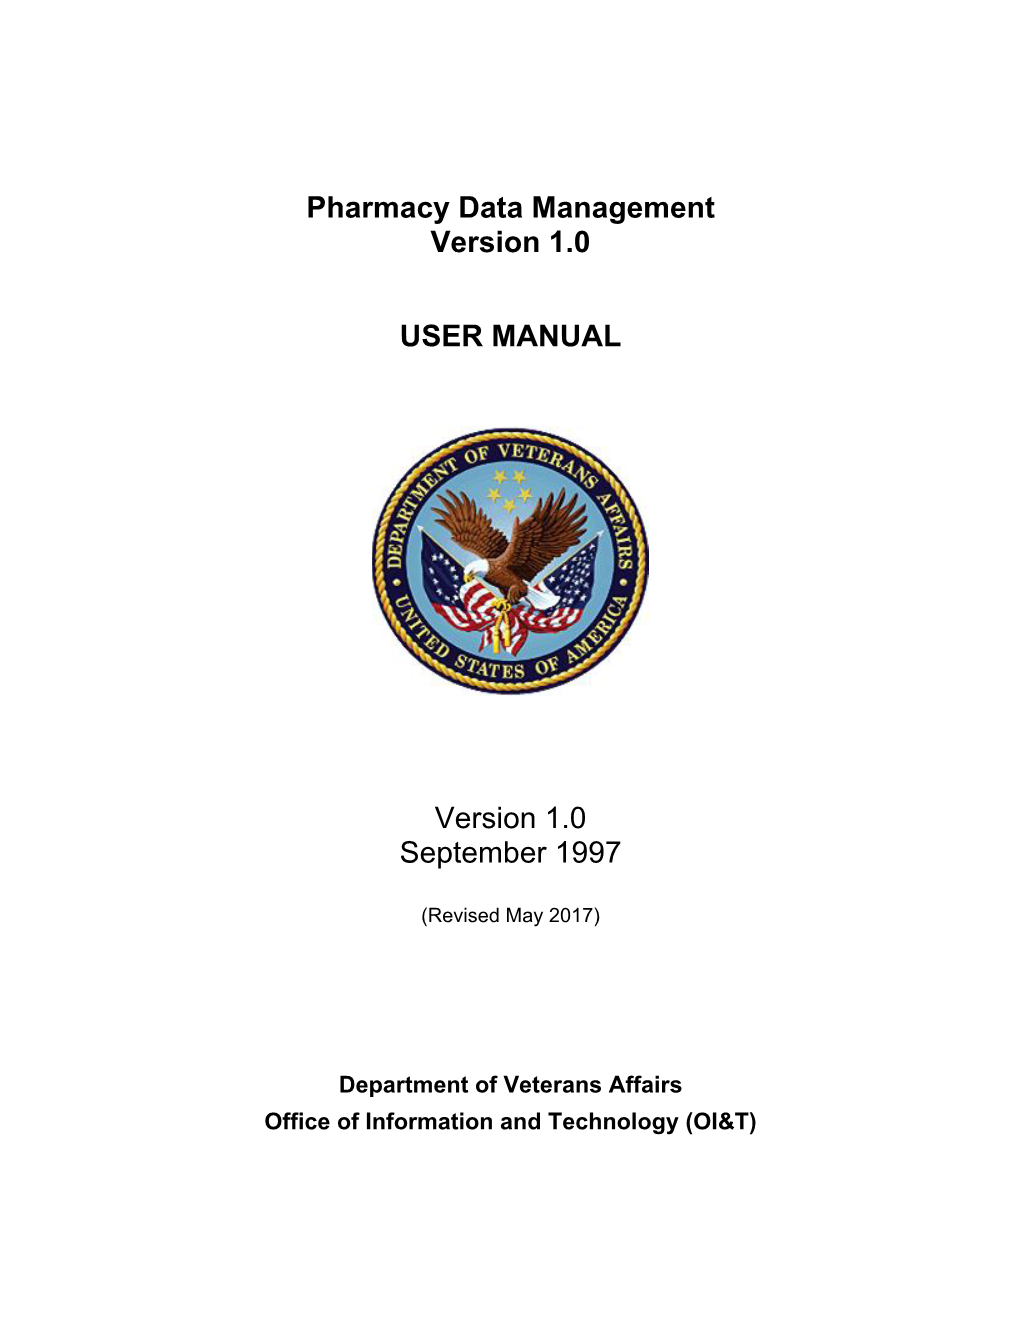 Department of Veterans Affairs Pharmacy Data Management User